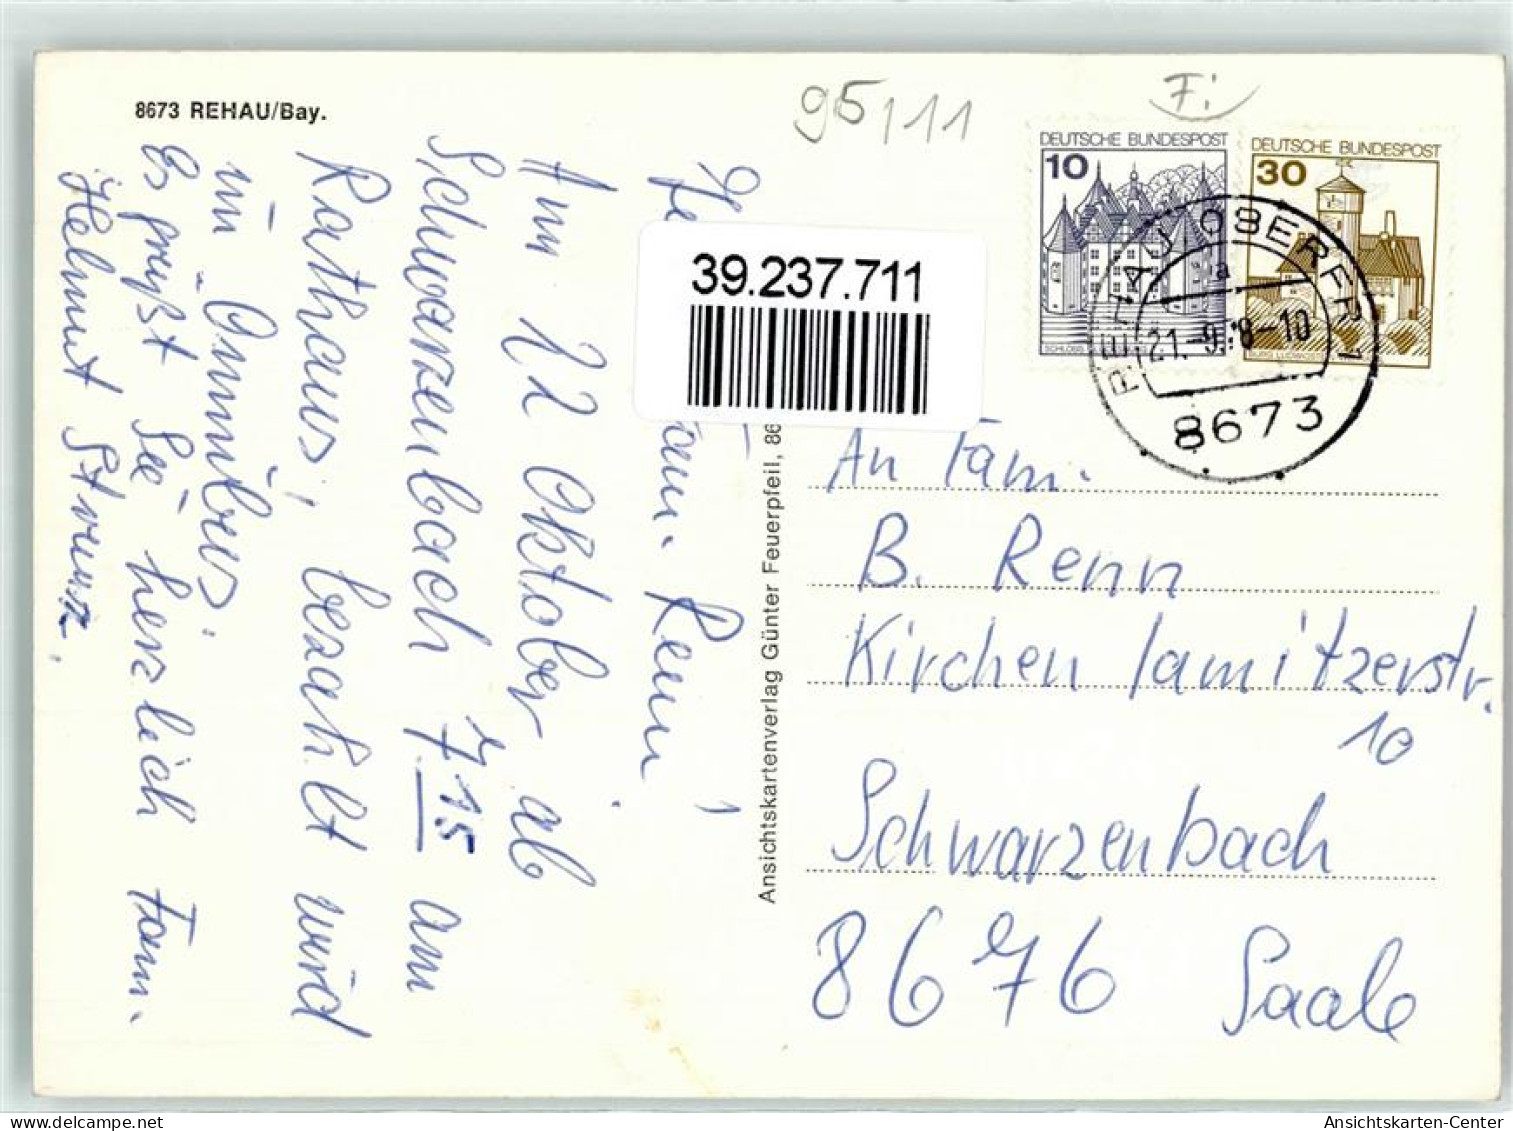 39237711 - Rehau , Oberfr - Rehau